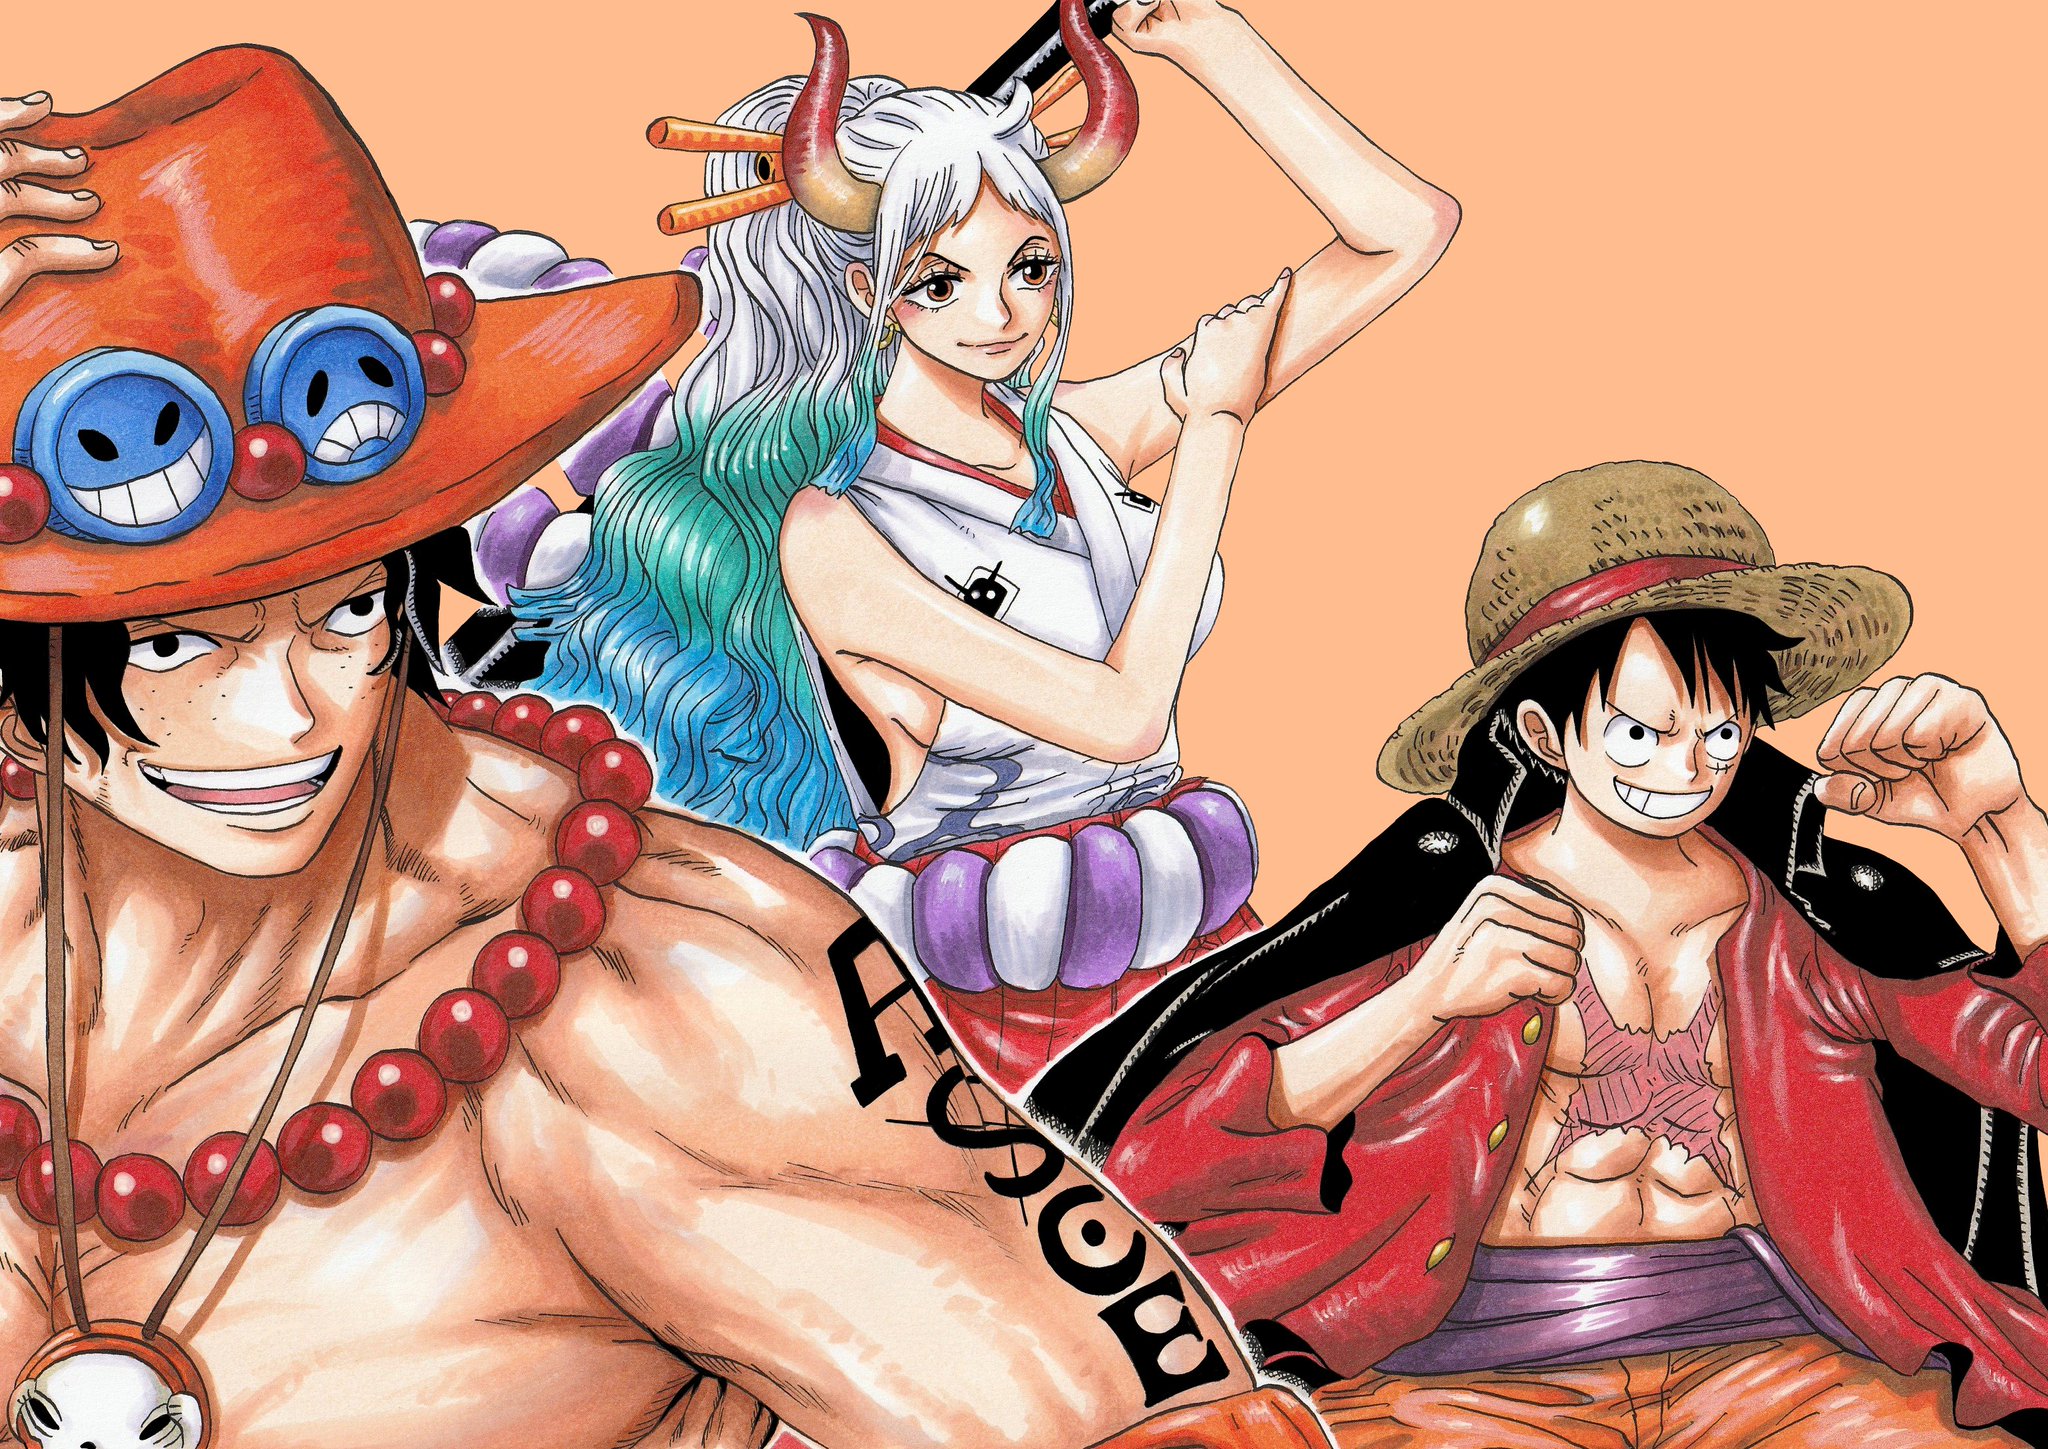 Baixar papel de parede para celular de Anime, Portgas D Ace, One Piece, Monkey D Luffy, Yamato (One Piece) gratuito.